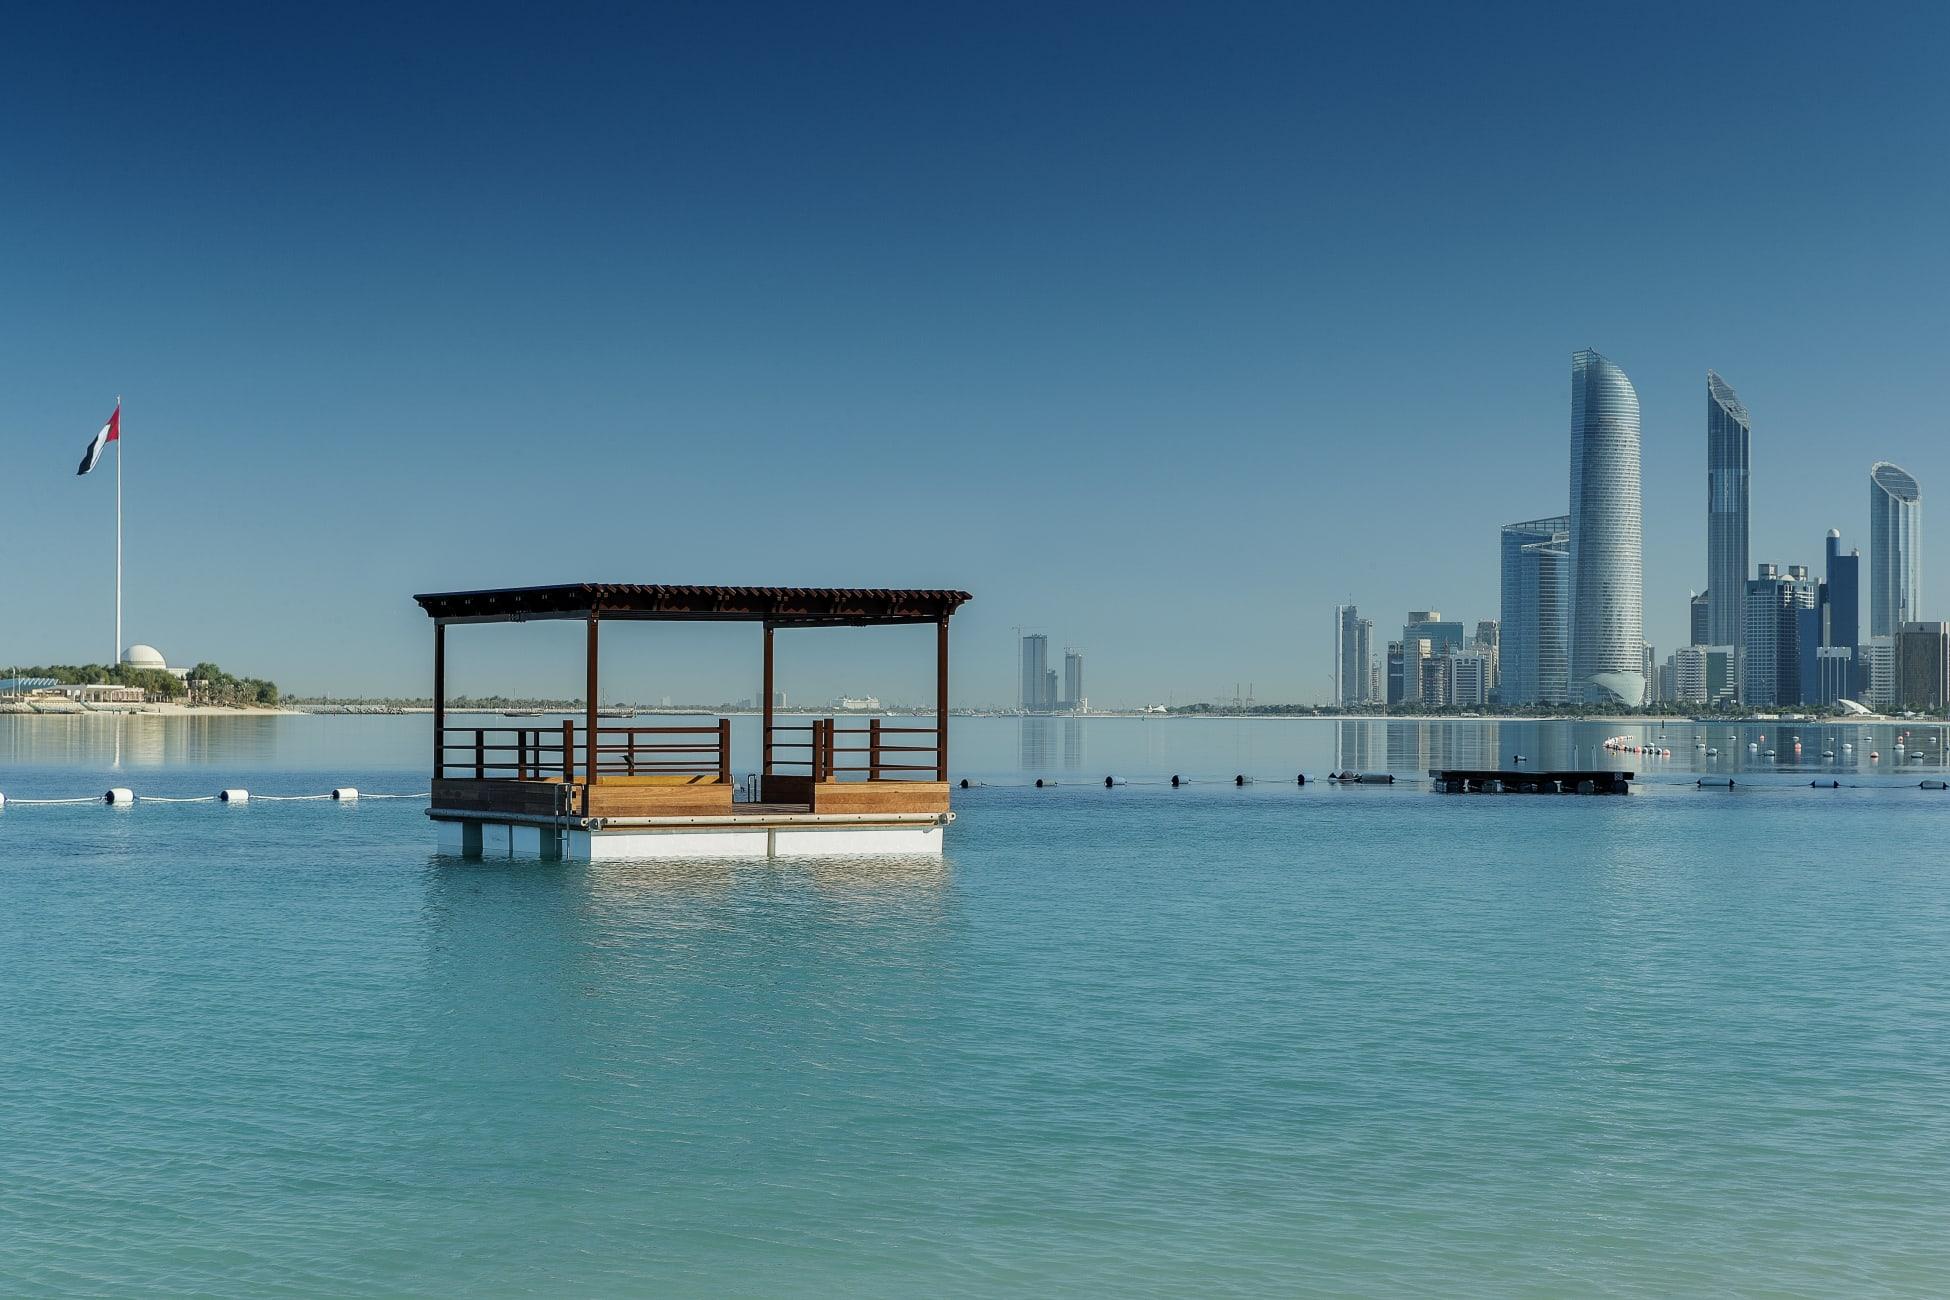 Radisson Blu Hotel & Resort, Abu Dhabi Corniche Water